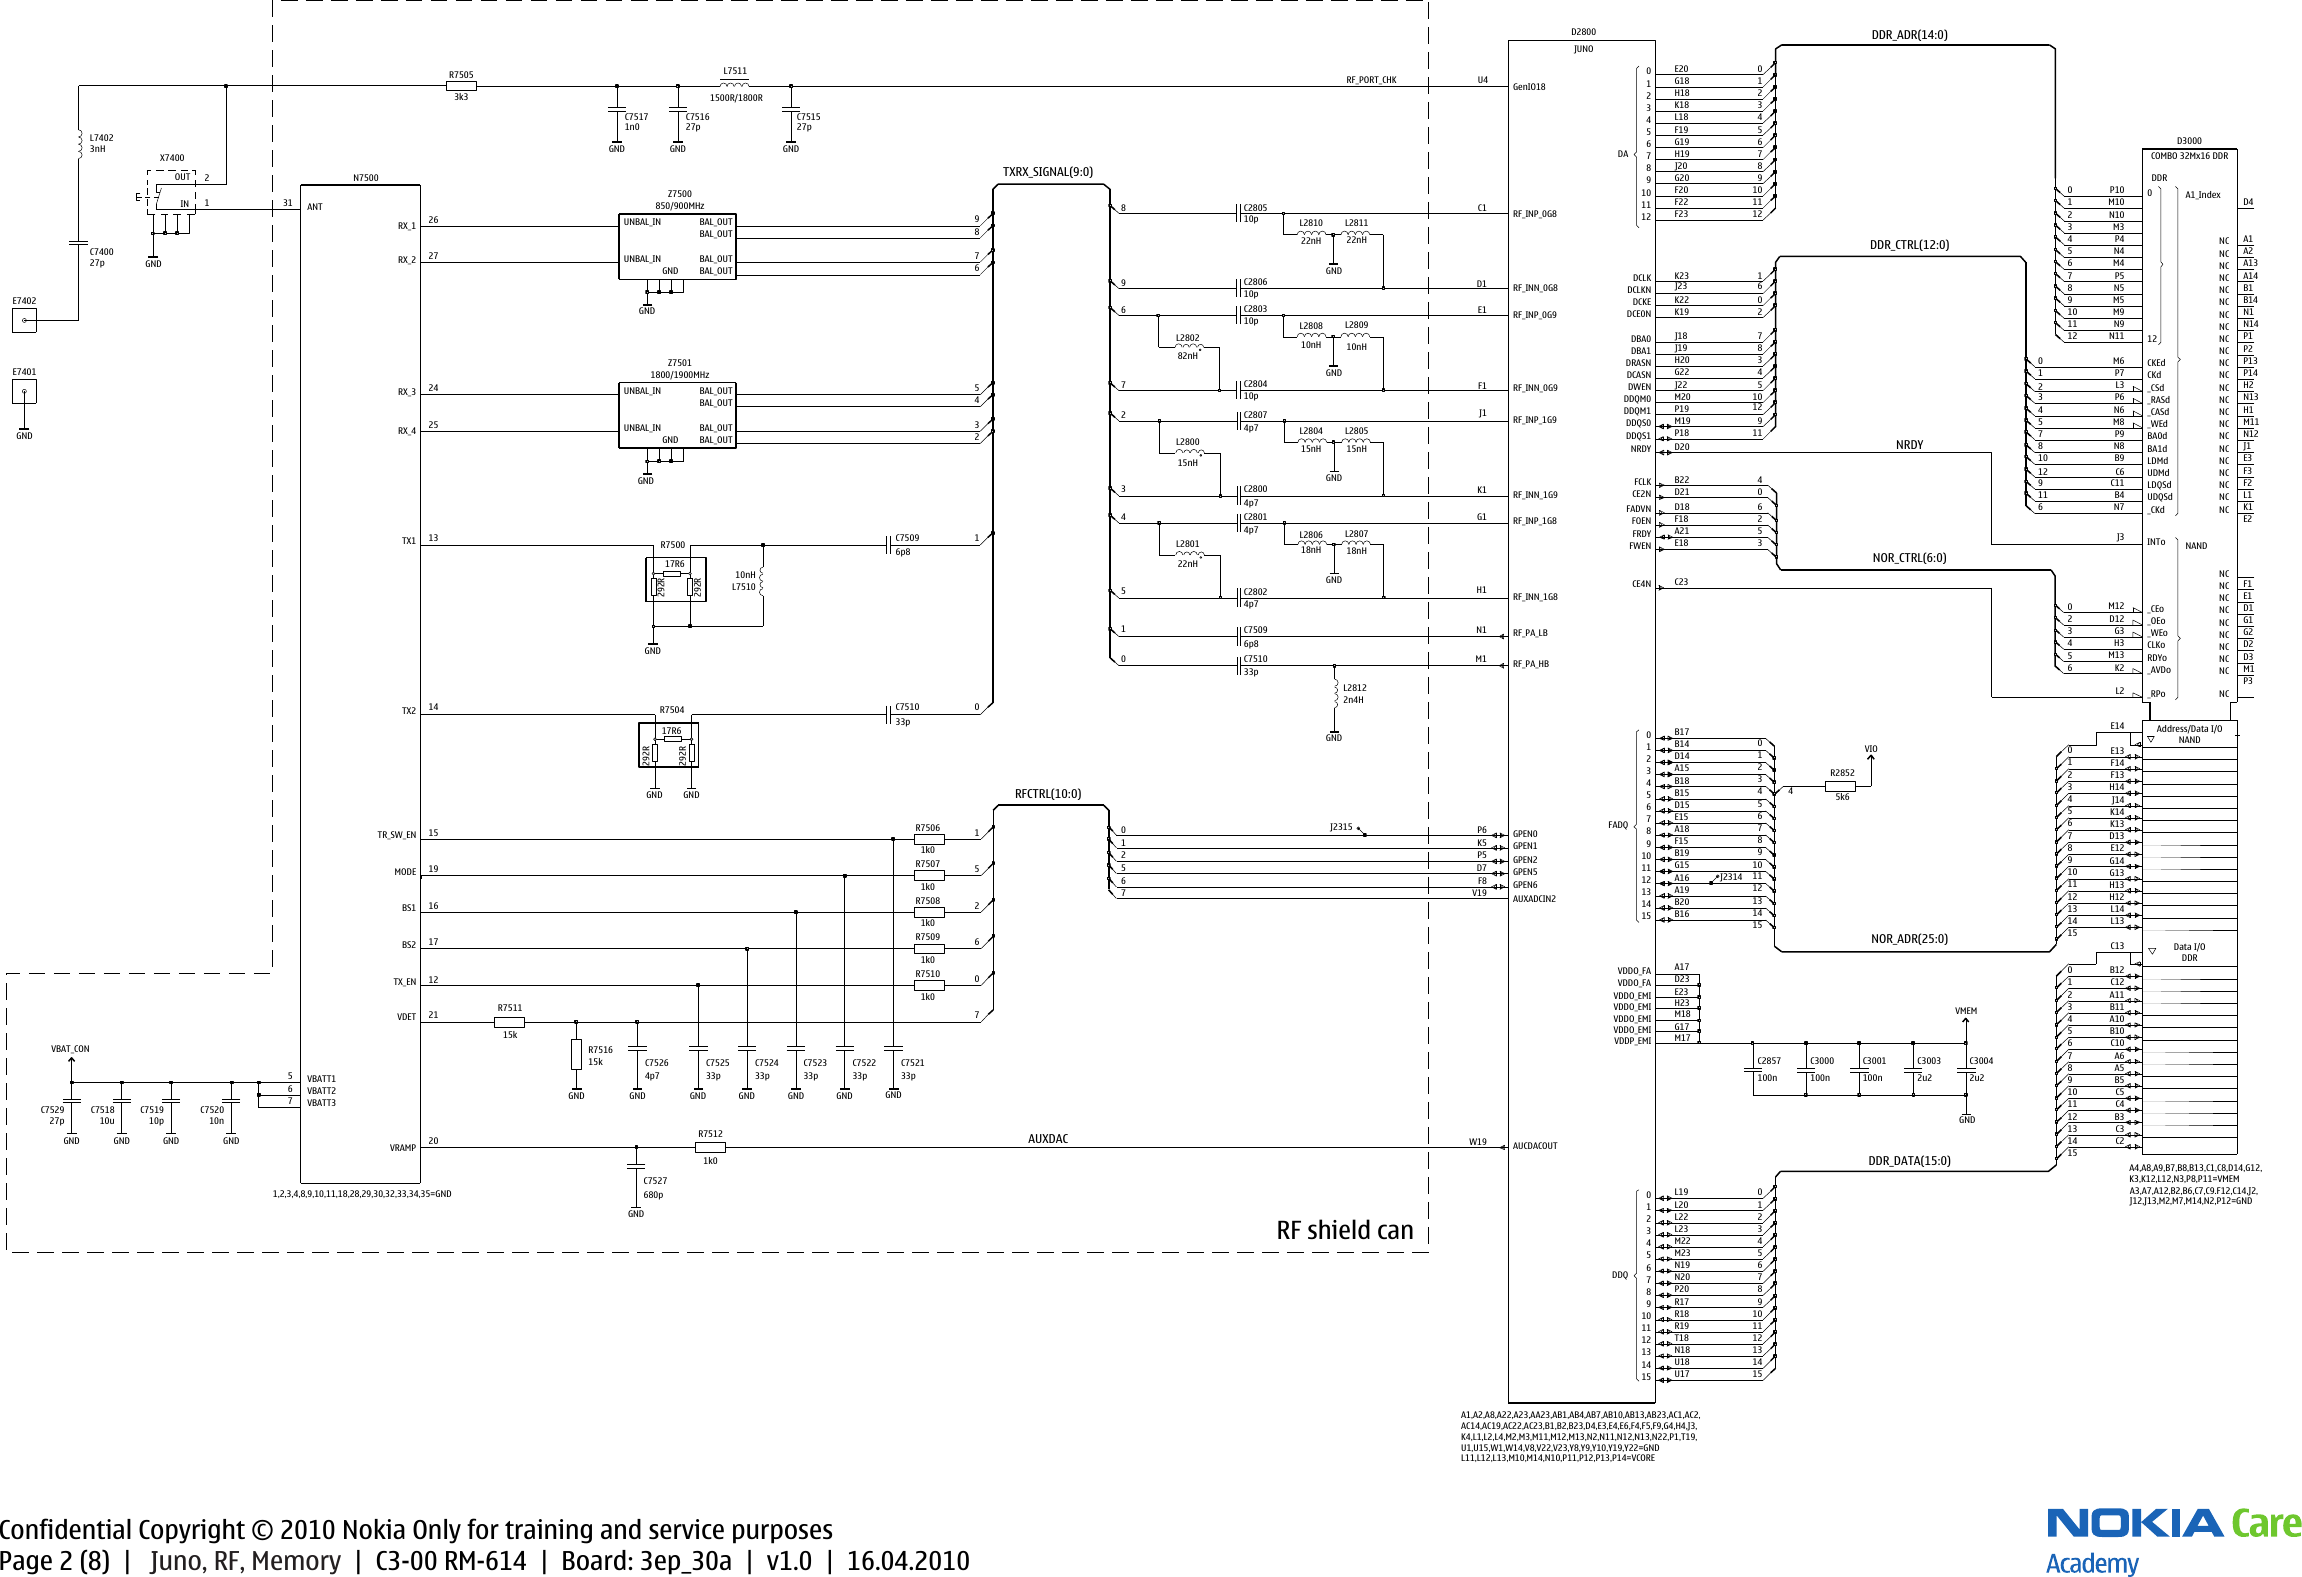 Page 2 of 8 - Nokia C3-00 RM-614 Service Schematics V1.0